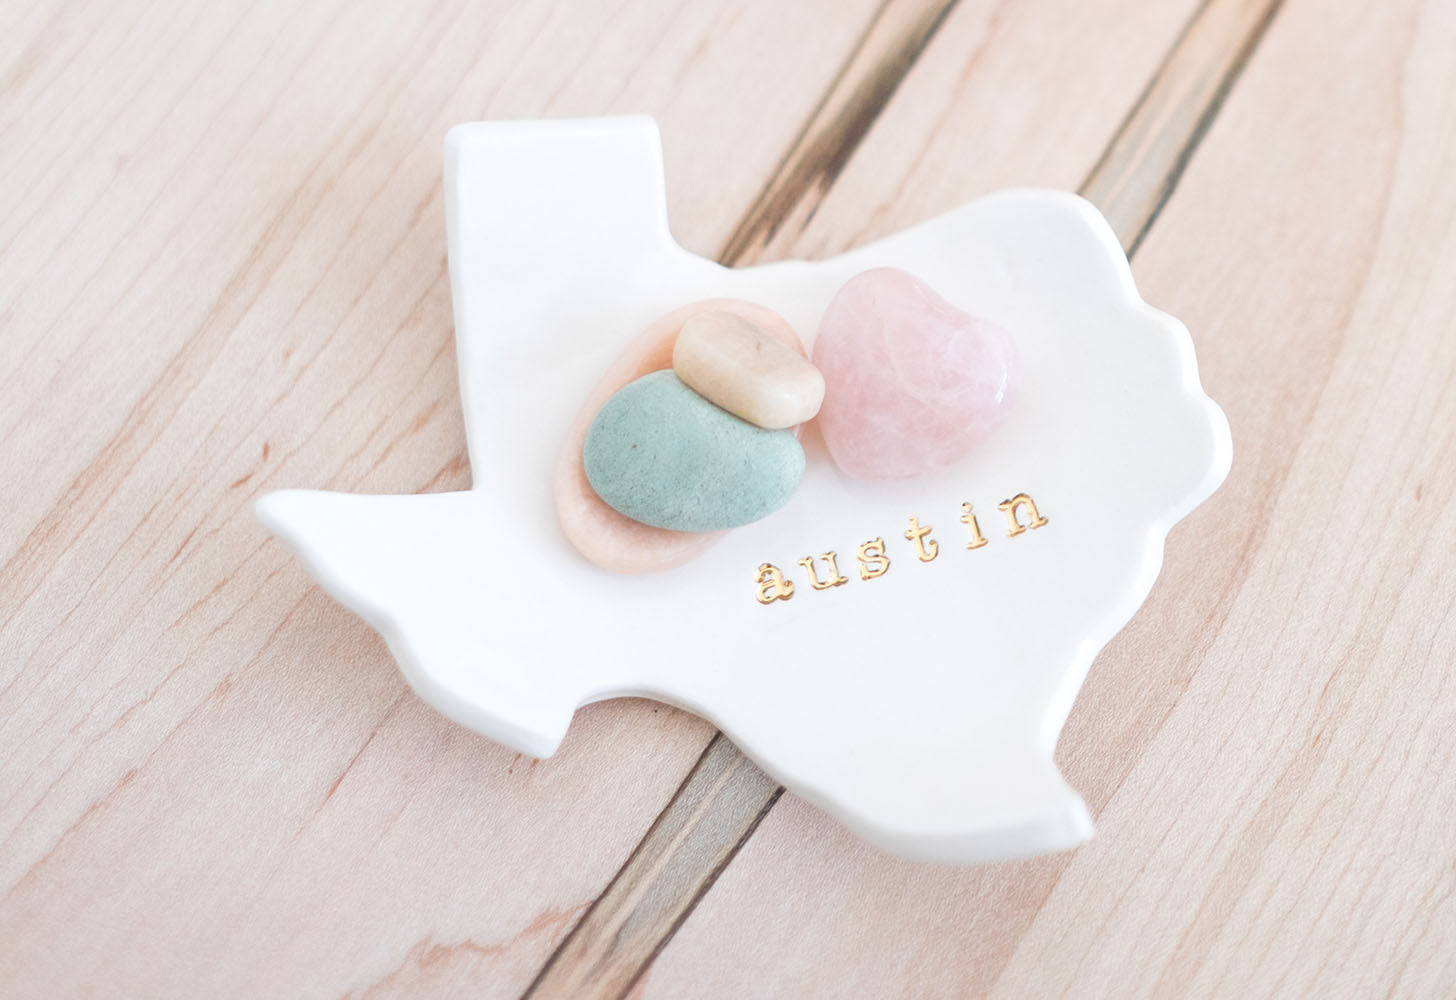 Austin Texas Ceramic Ring Dish decorated with rocks